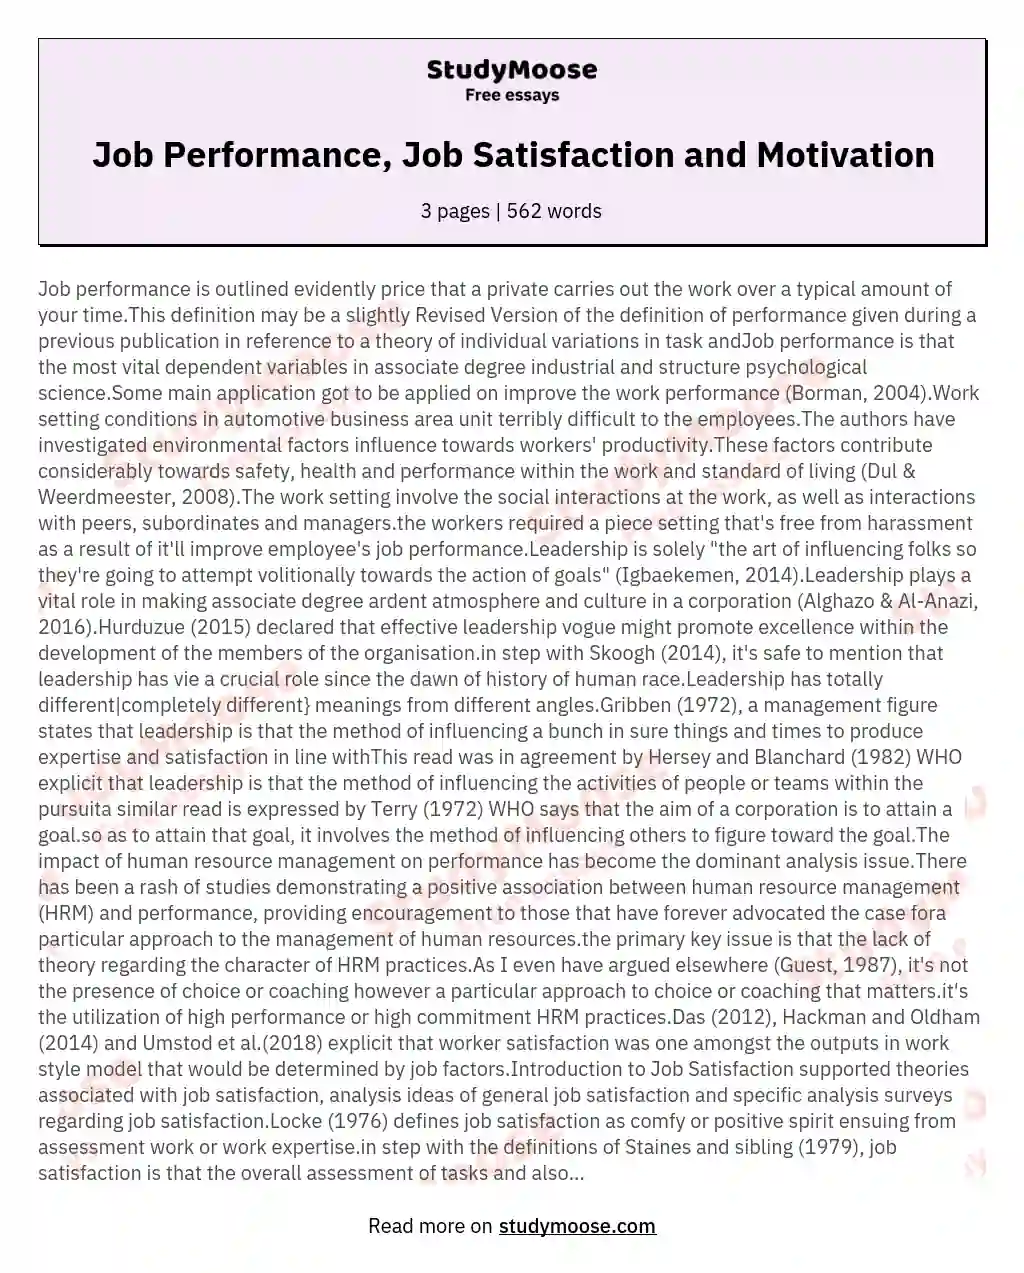 Job Performance, Job Satisfaction and Motivation